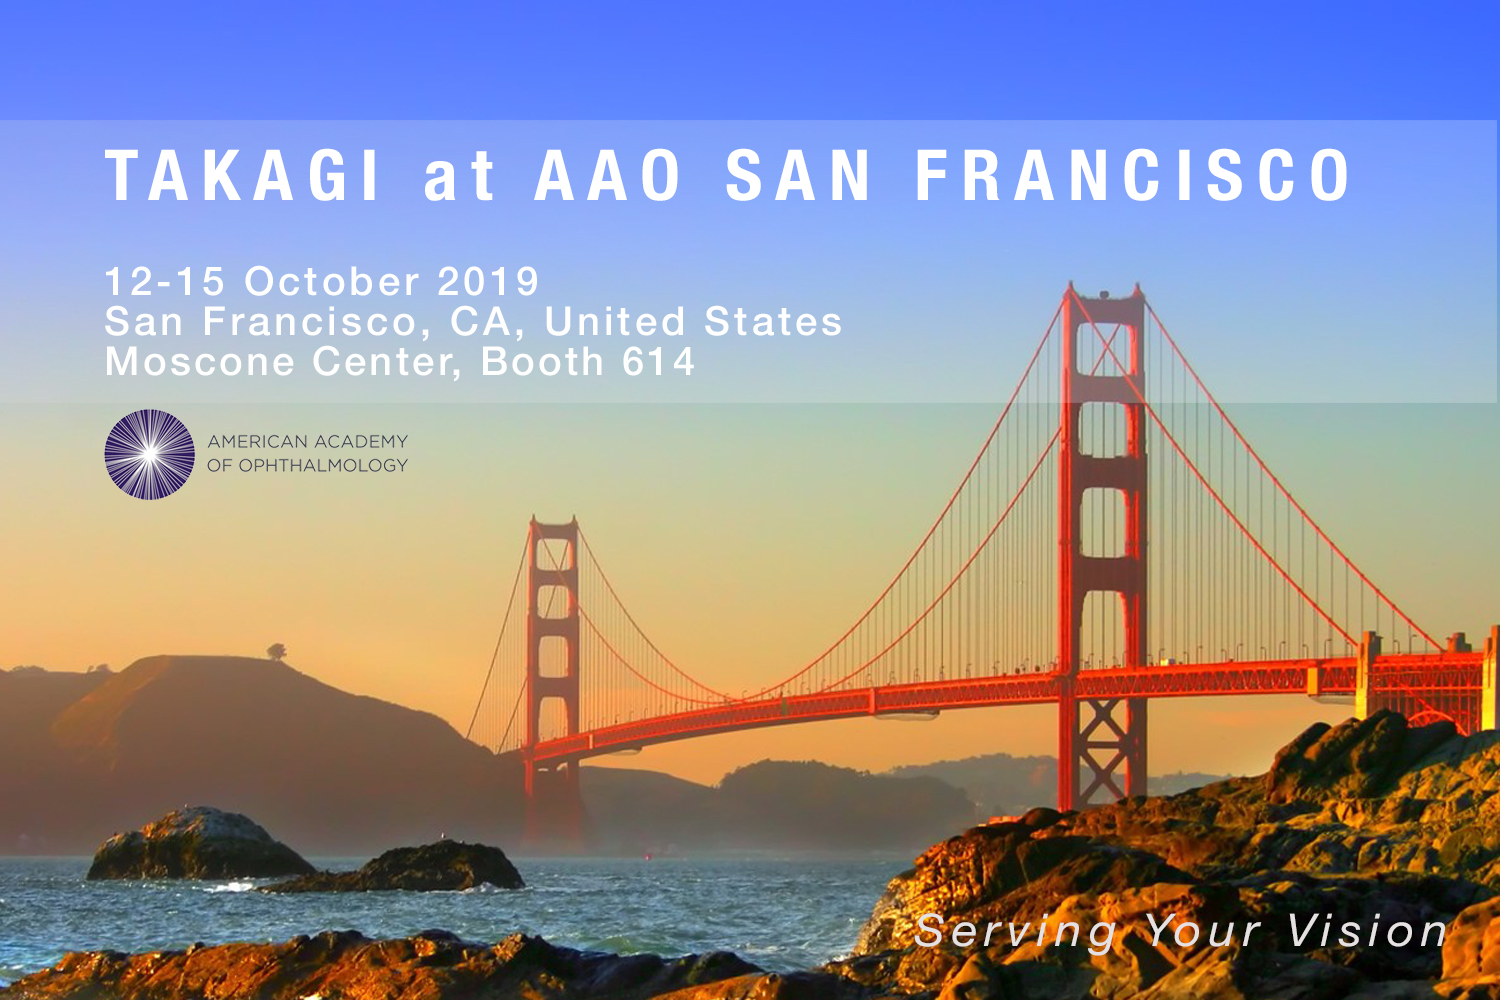 Takagi at AAO San Francisco 2019 Visit Our Booth 614